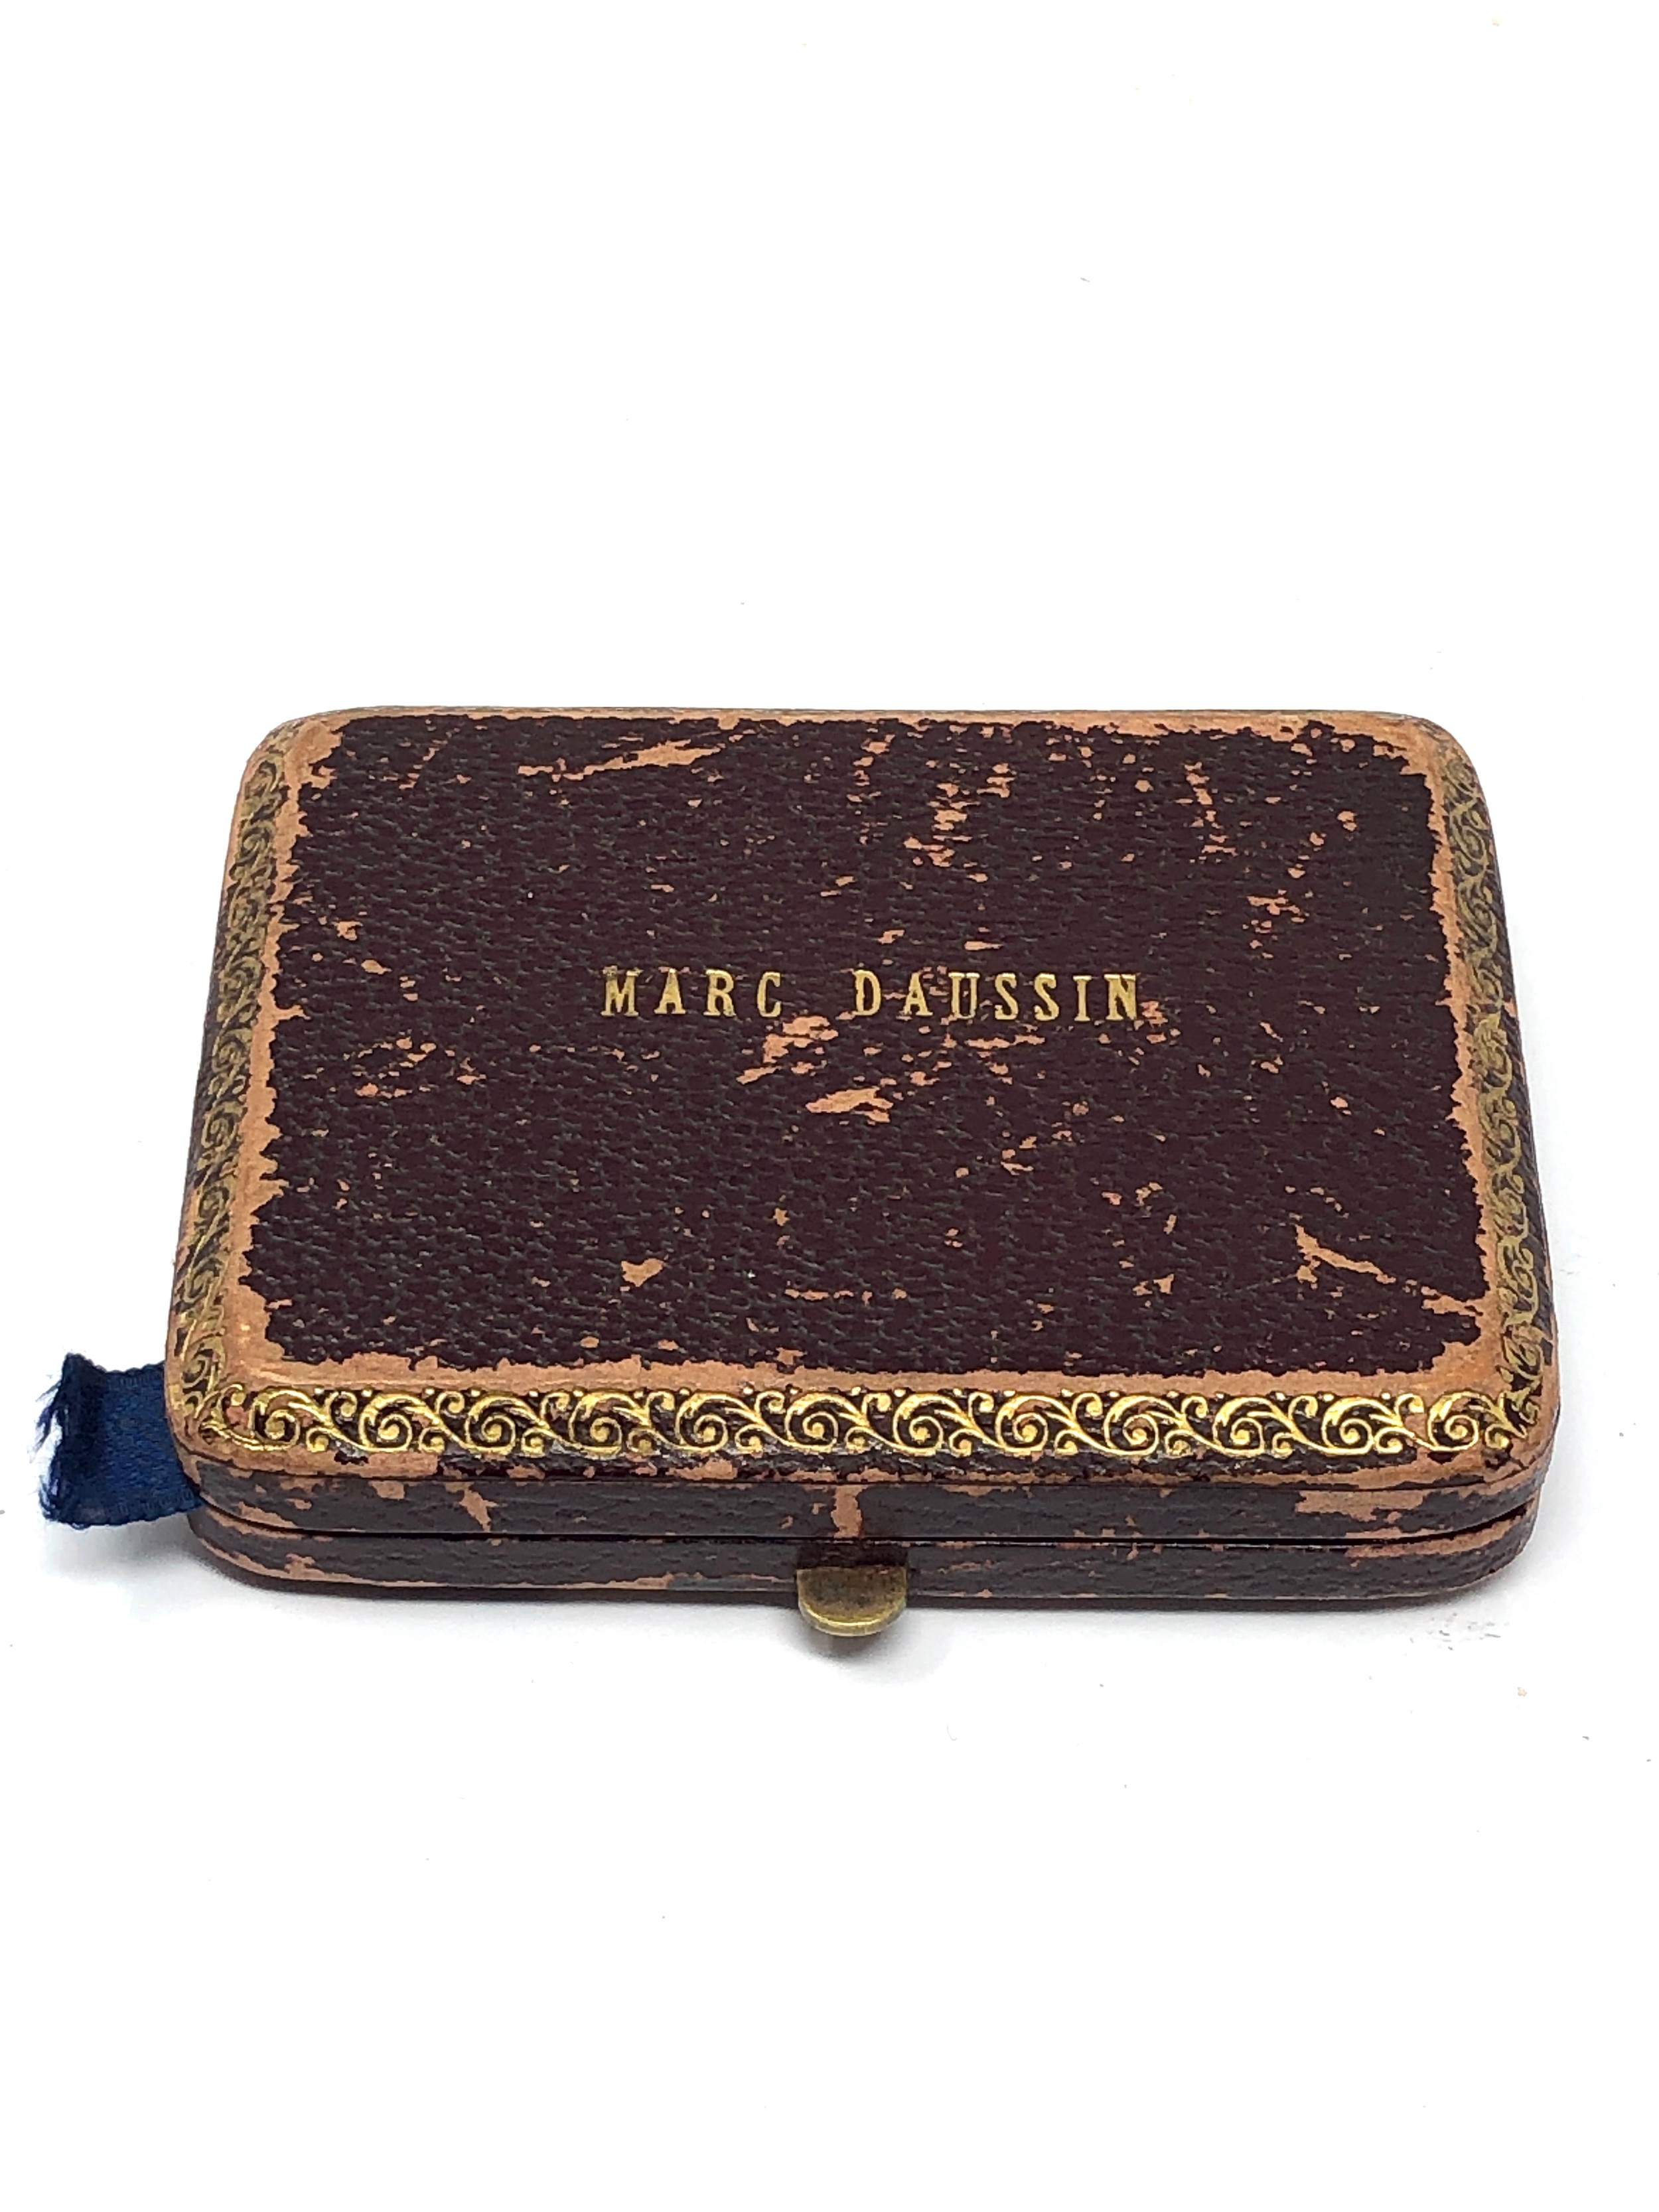 Original 1899 boxed Belgium hainault commercial institute Henri dutrieux bronze medal by Rombaux - Image 5 of 5